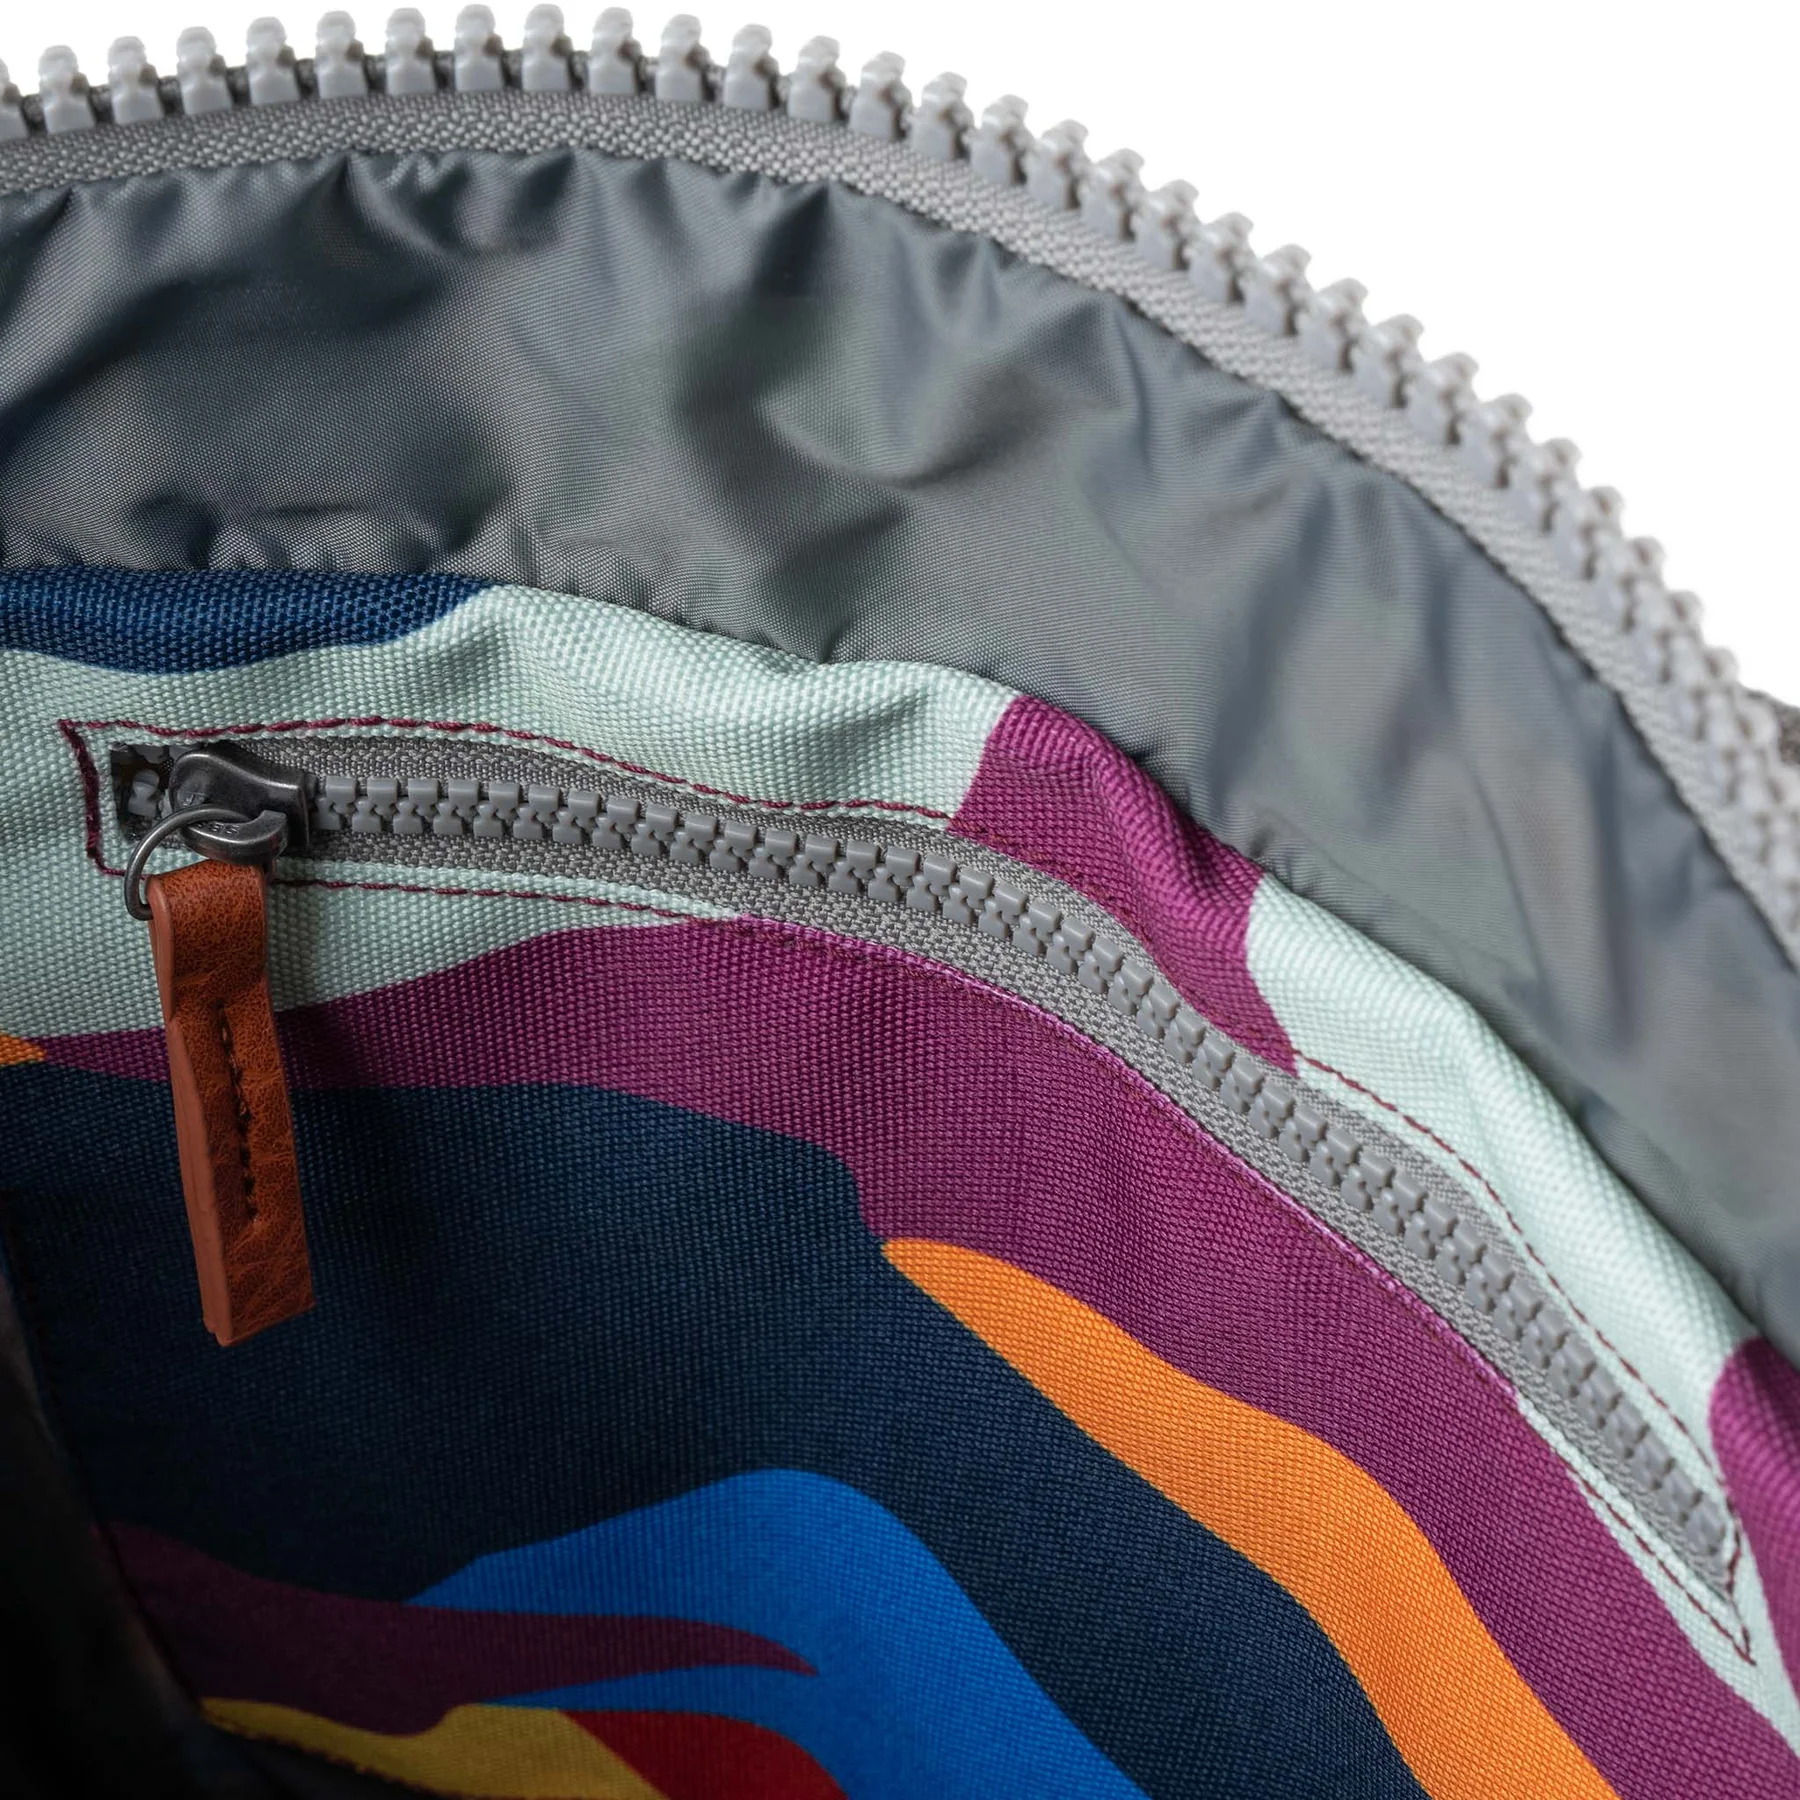 Canfield B (Recycled Canvas) Medium Bag - Bold Camo zipper detail